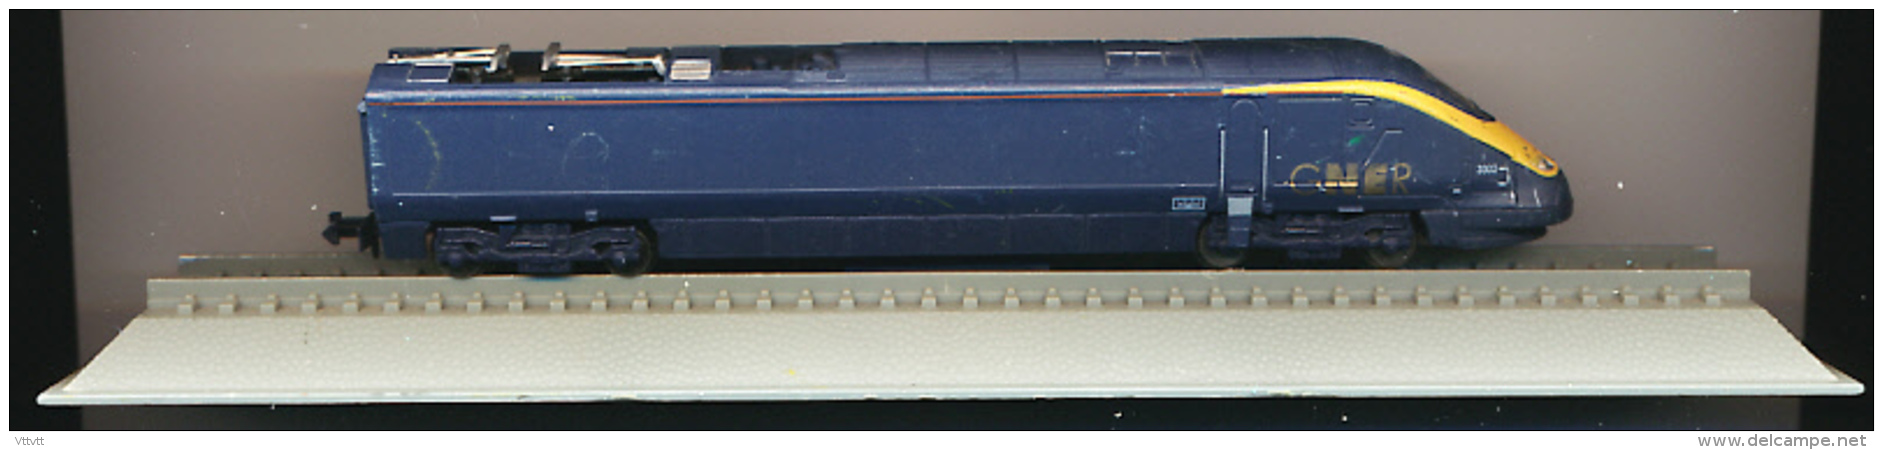 Locomotive : GNER Class 373 "White Rose", Echelle N 1/160, G = 9 Mm, United Kingdom, Grande-Bretagne - Locomotieven